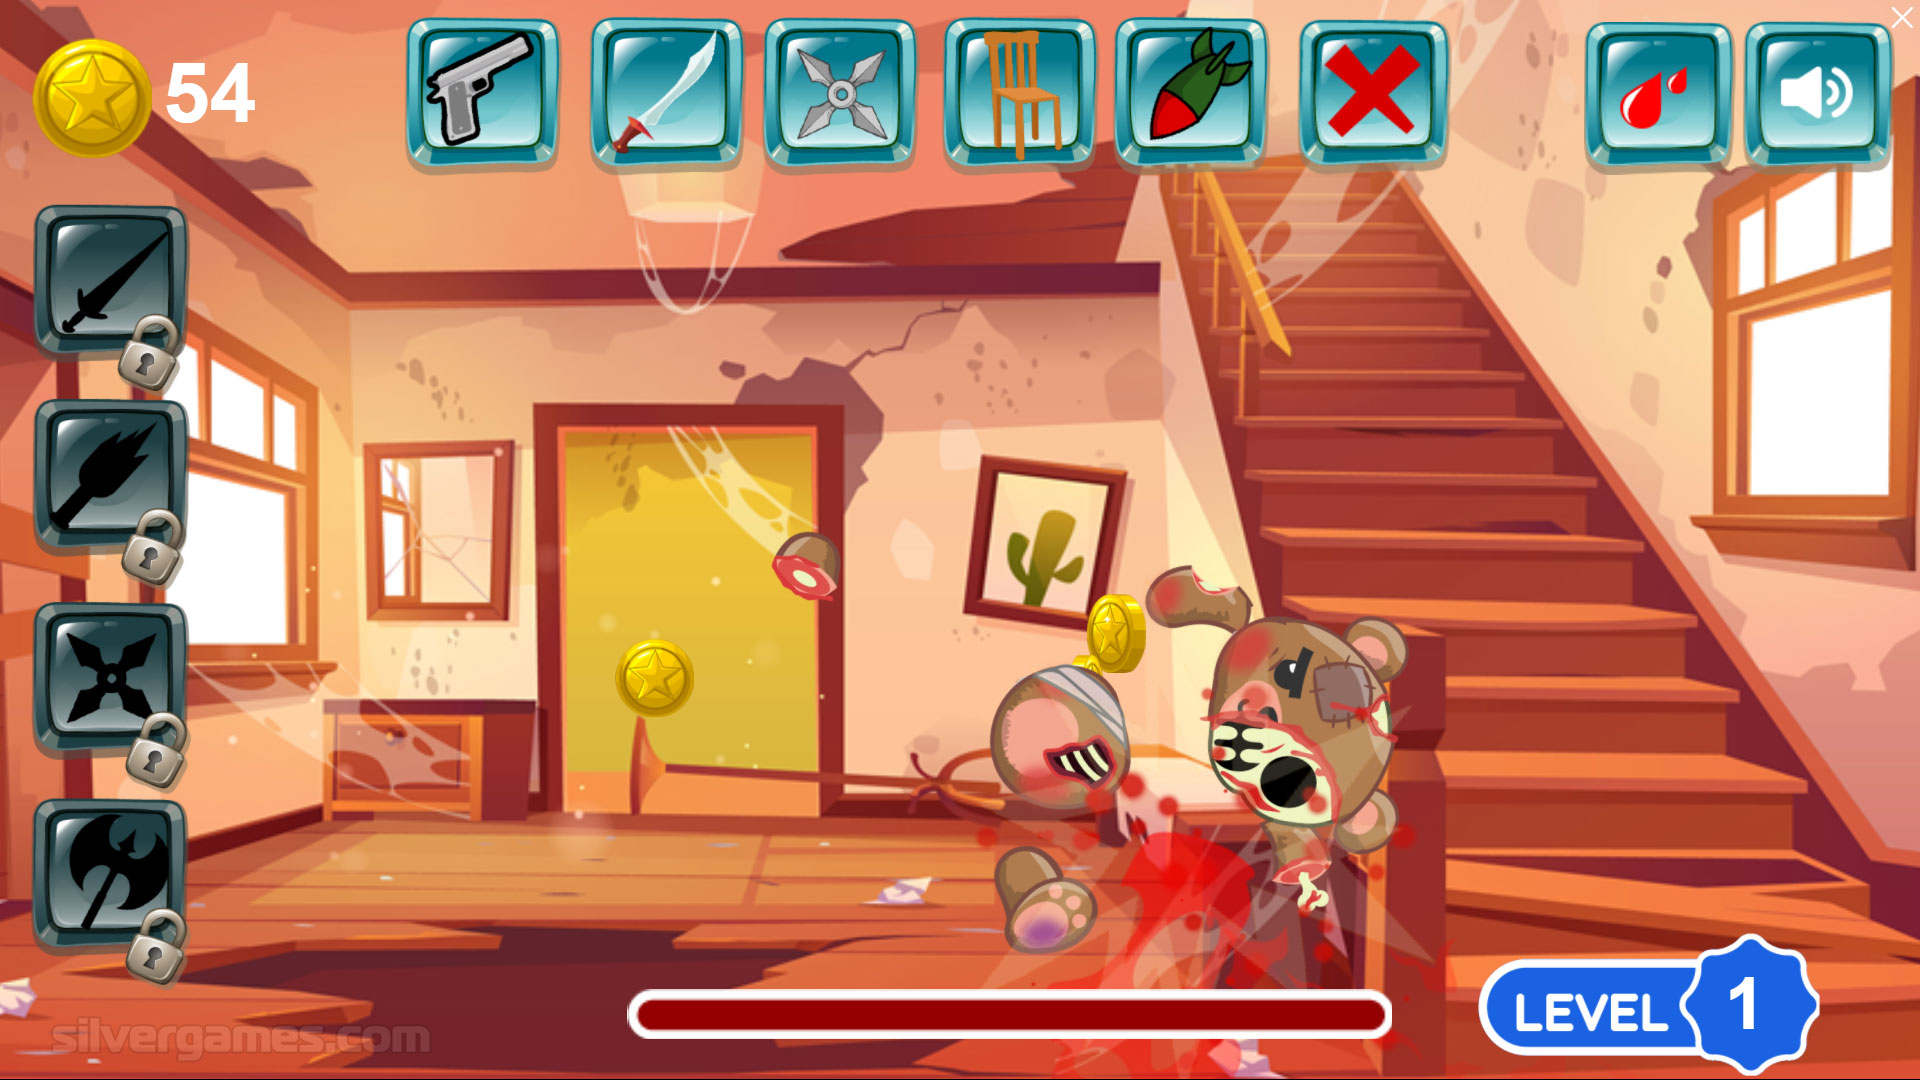 Kick the Teddy Bear - Play Kick the Teddy Bear Online on SilverGames